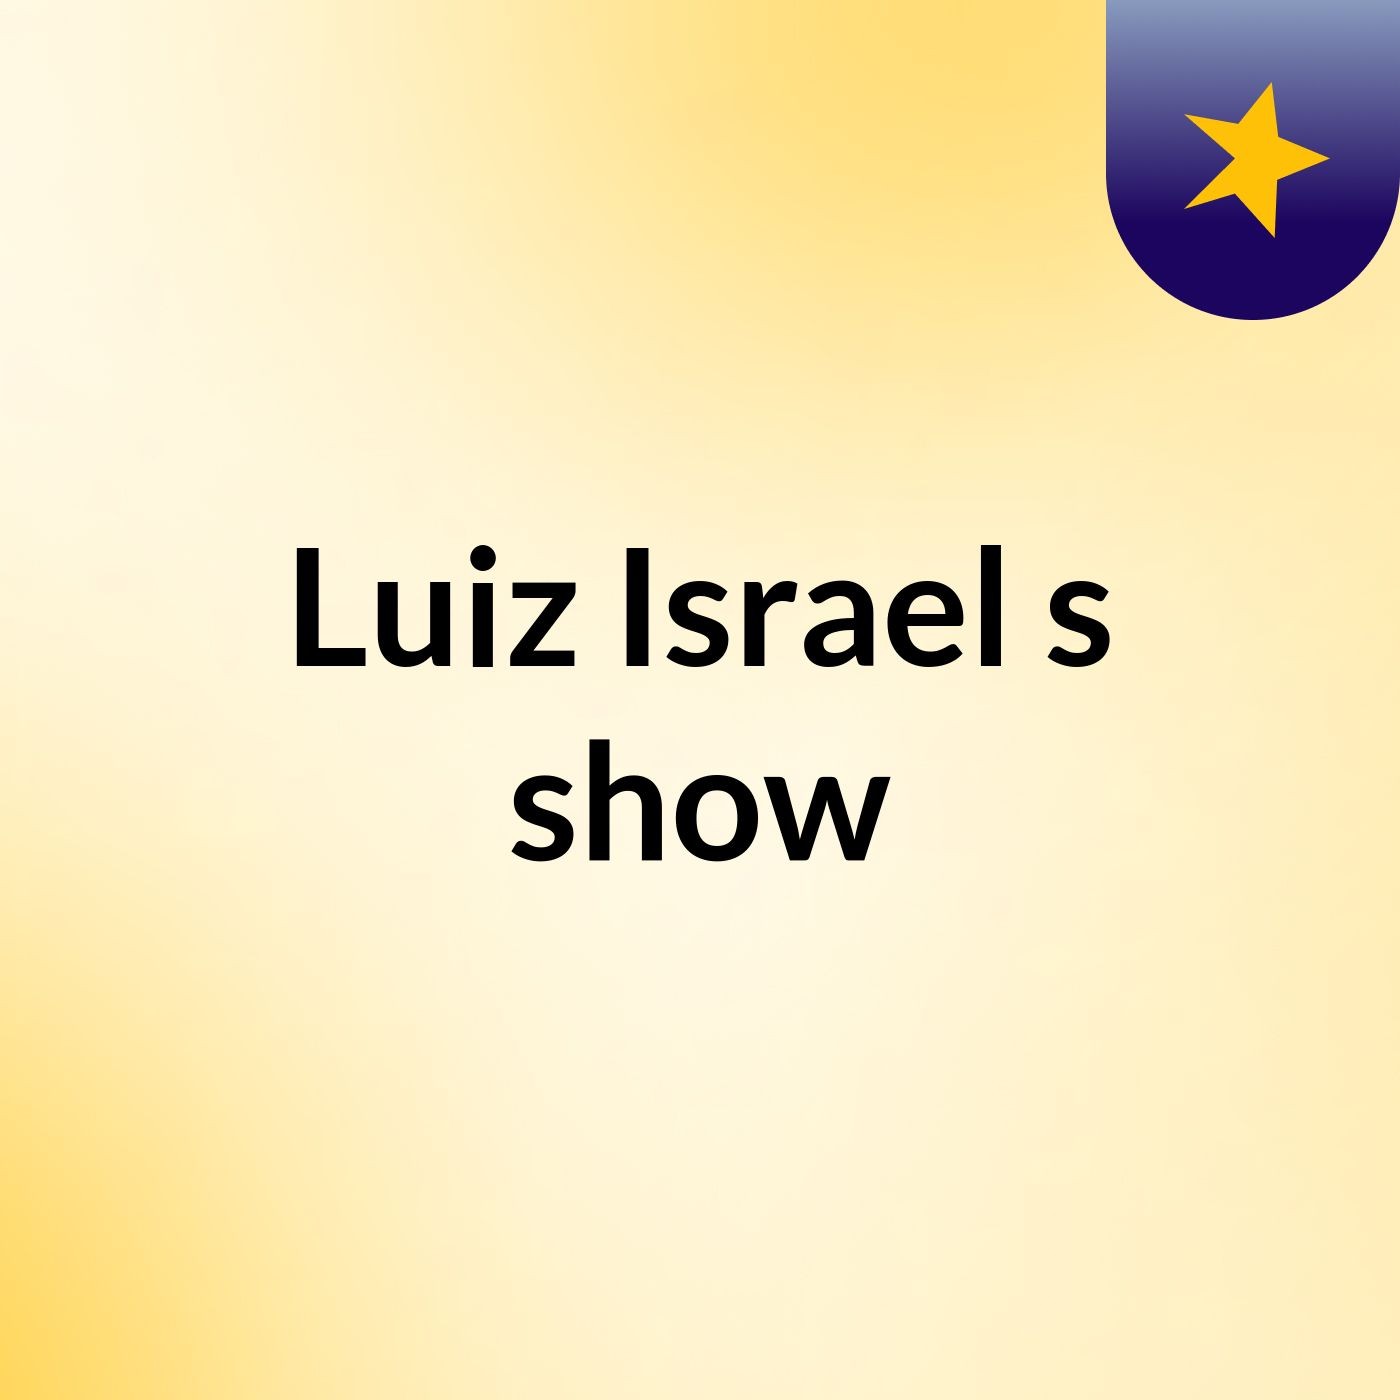 Luiz Israel's show